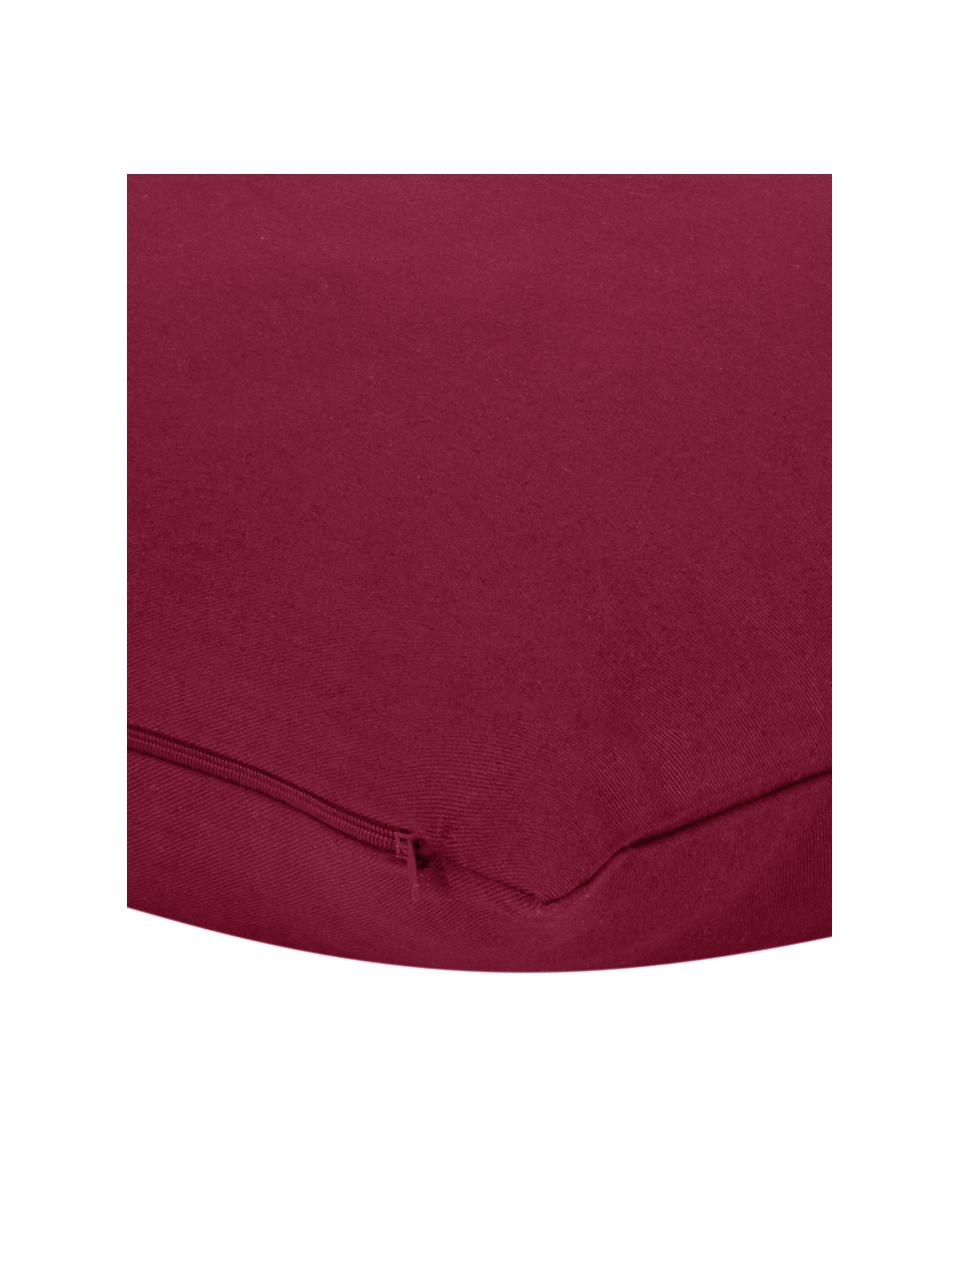 Federa arredo in cotone rosso Mads, 100% cotone, Rosso, Larg. 30 x Lung. 50 cm